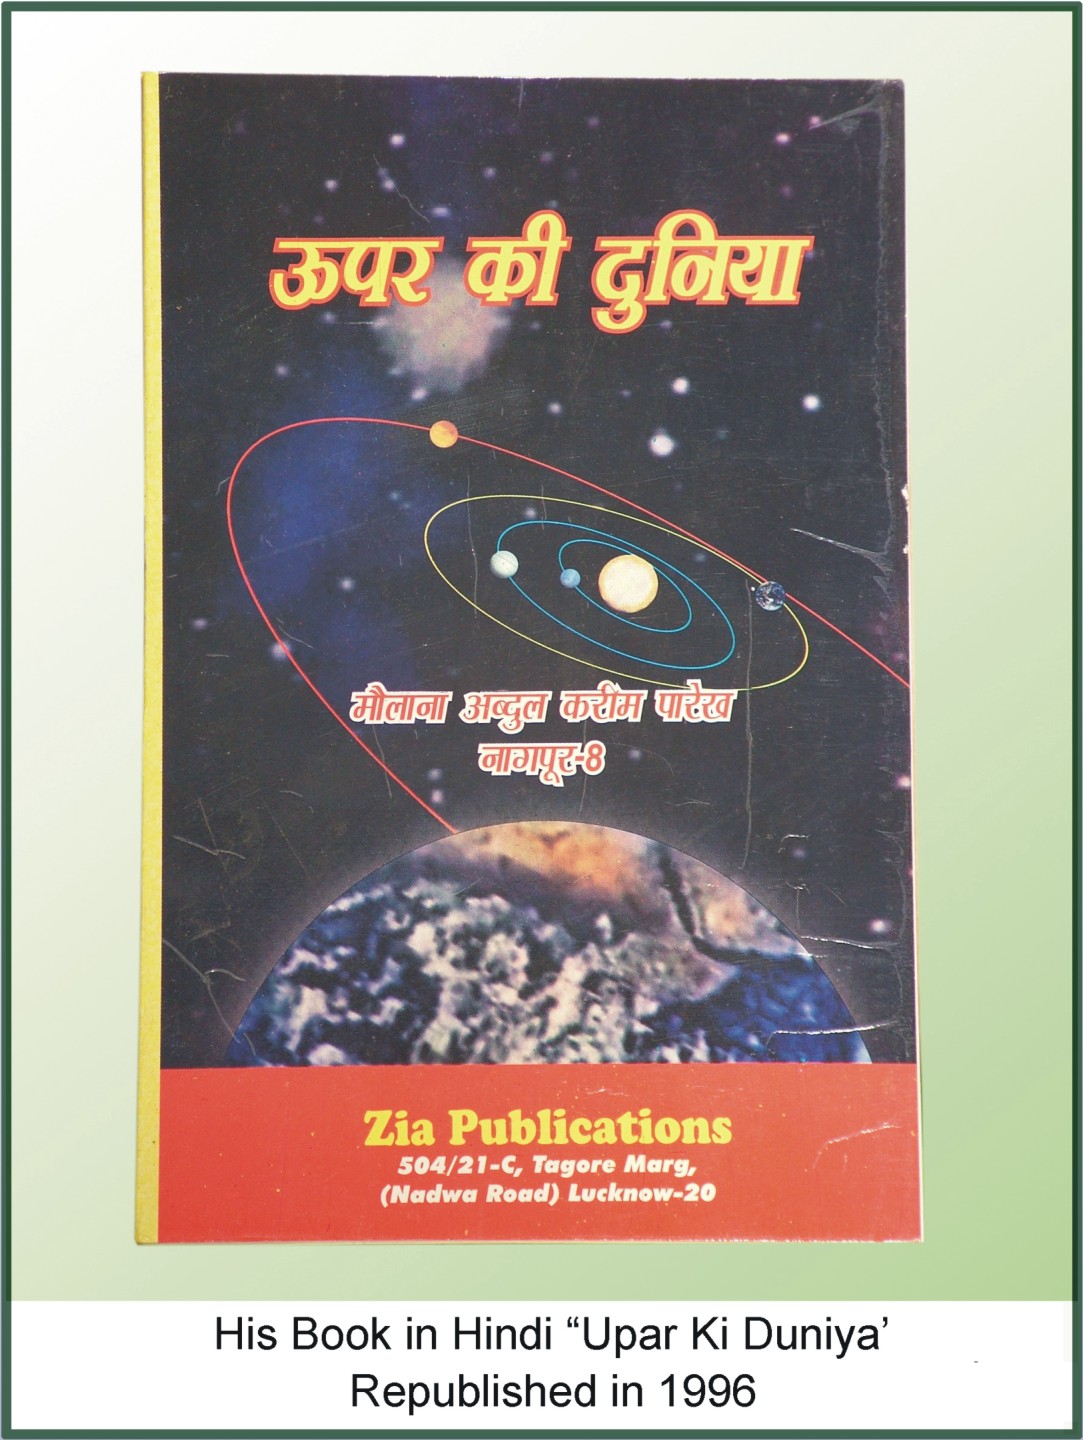 Upar ki Duniya (Hindi) Republished in 1996